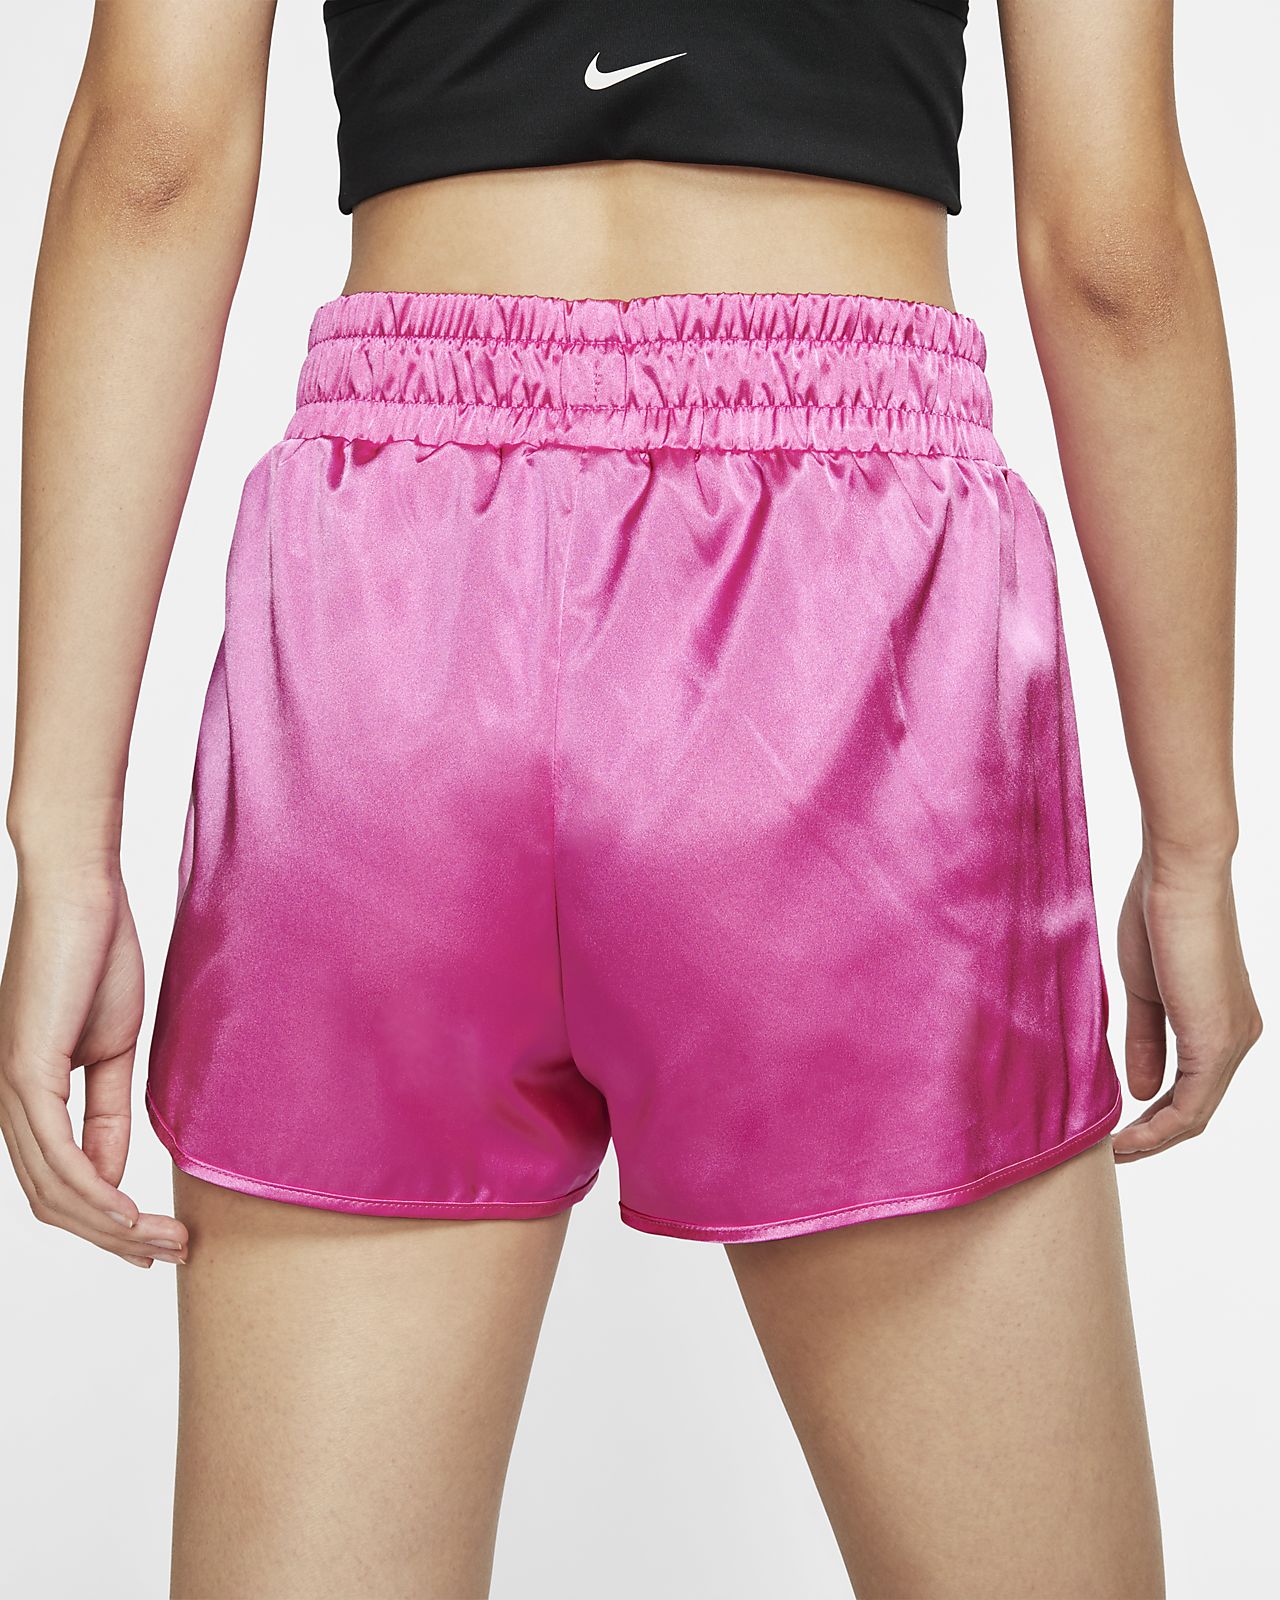 Атласные шорты. Женские шорты Nike Sportswear Air shorts. Shorts Nike Sportswear Alumni shorts Pink. Шорты найк аер розовые женские. Двухслойные шорты найк для женщин короткие.